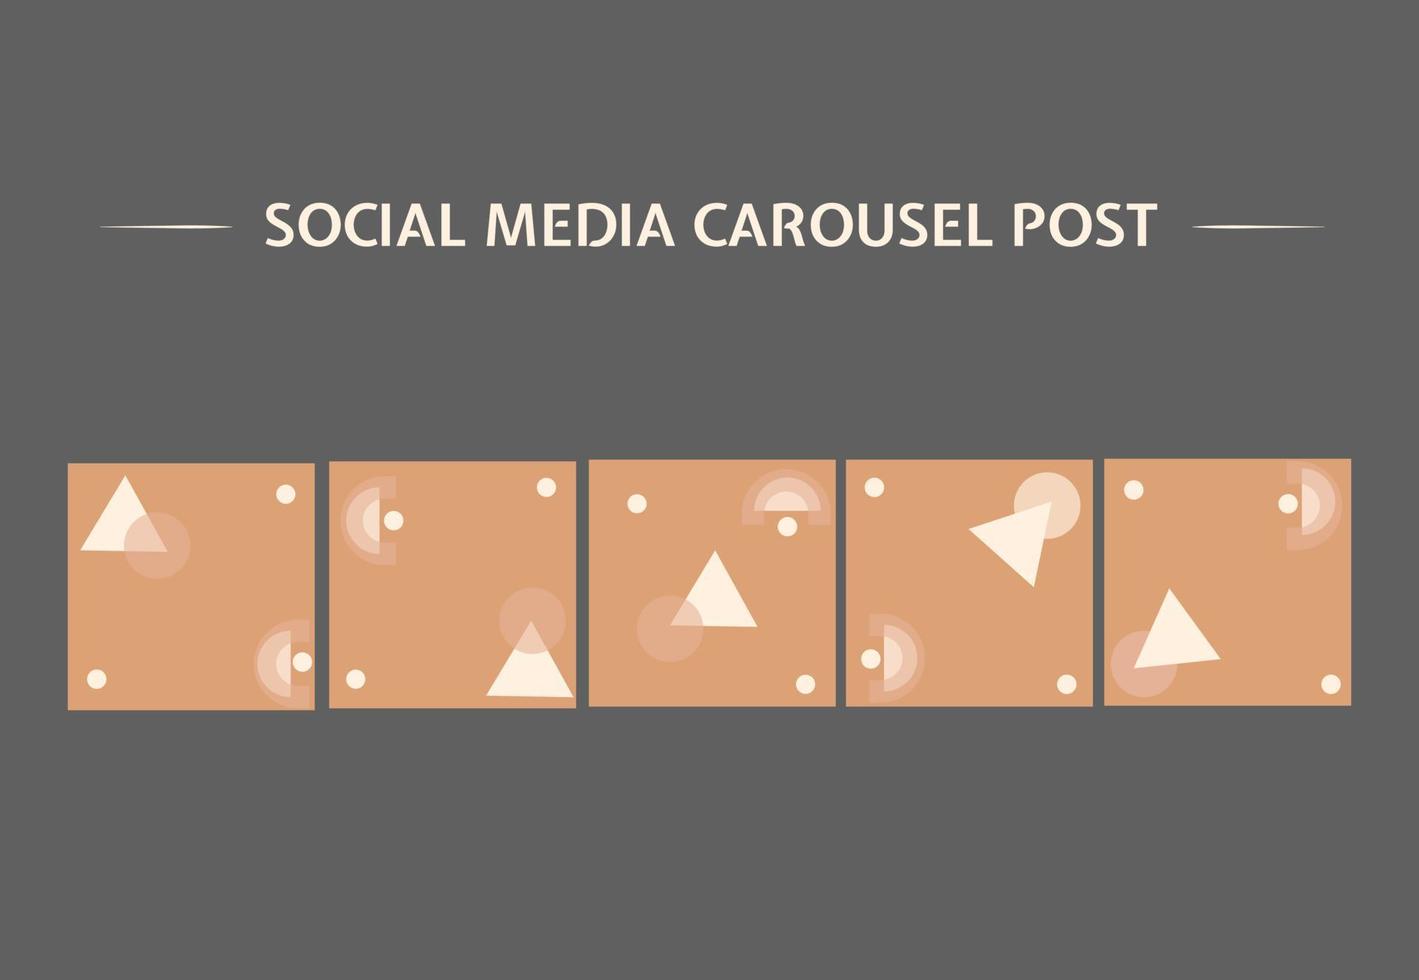 modelo de postagem de carrossel de mídia social vetor